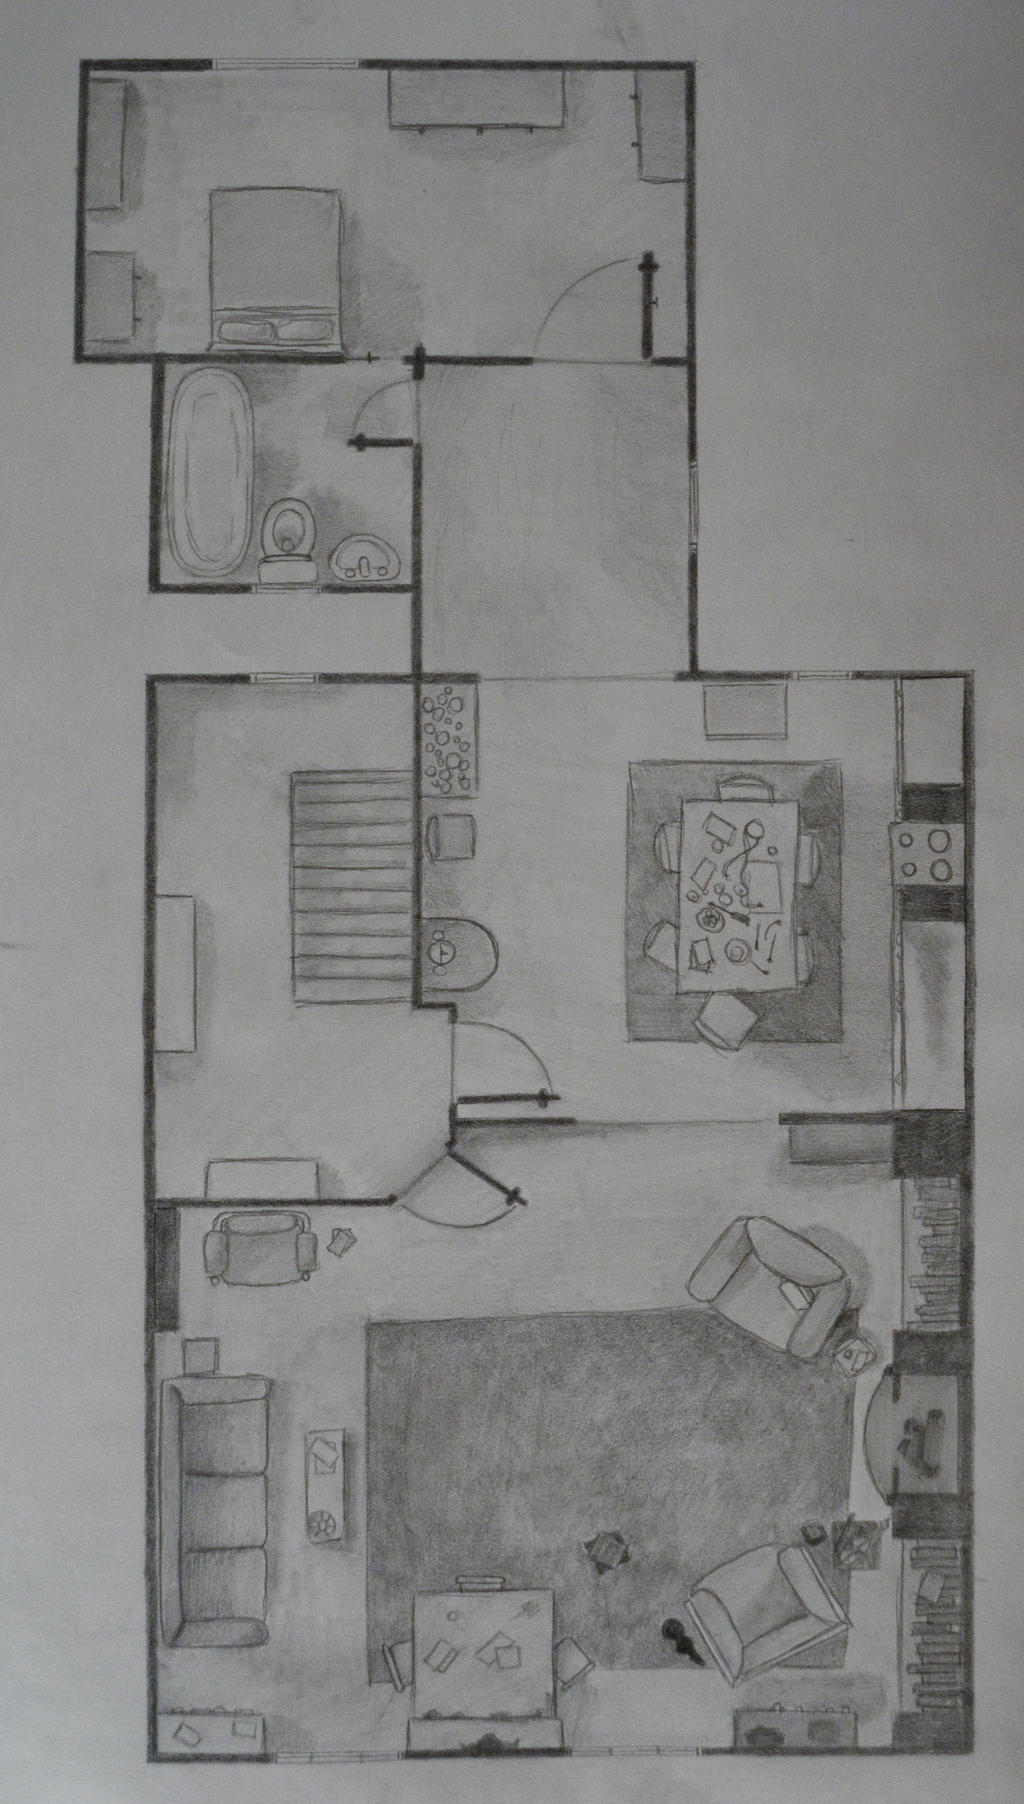 Floorplan of 221B Baker Street by picturemusic779 on